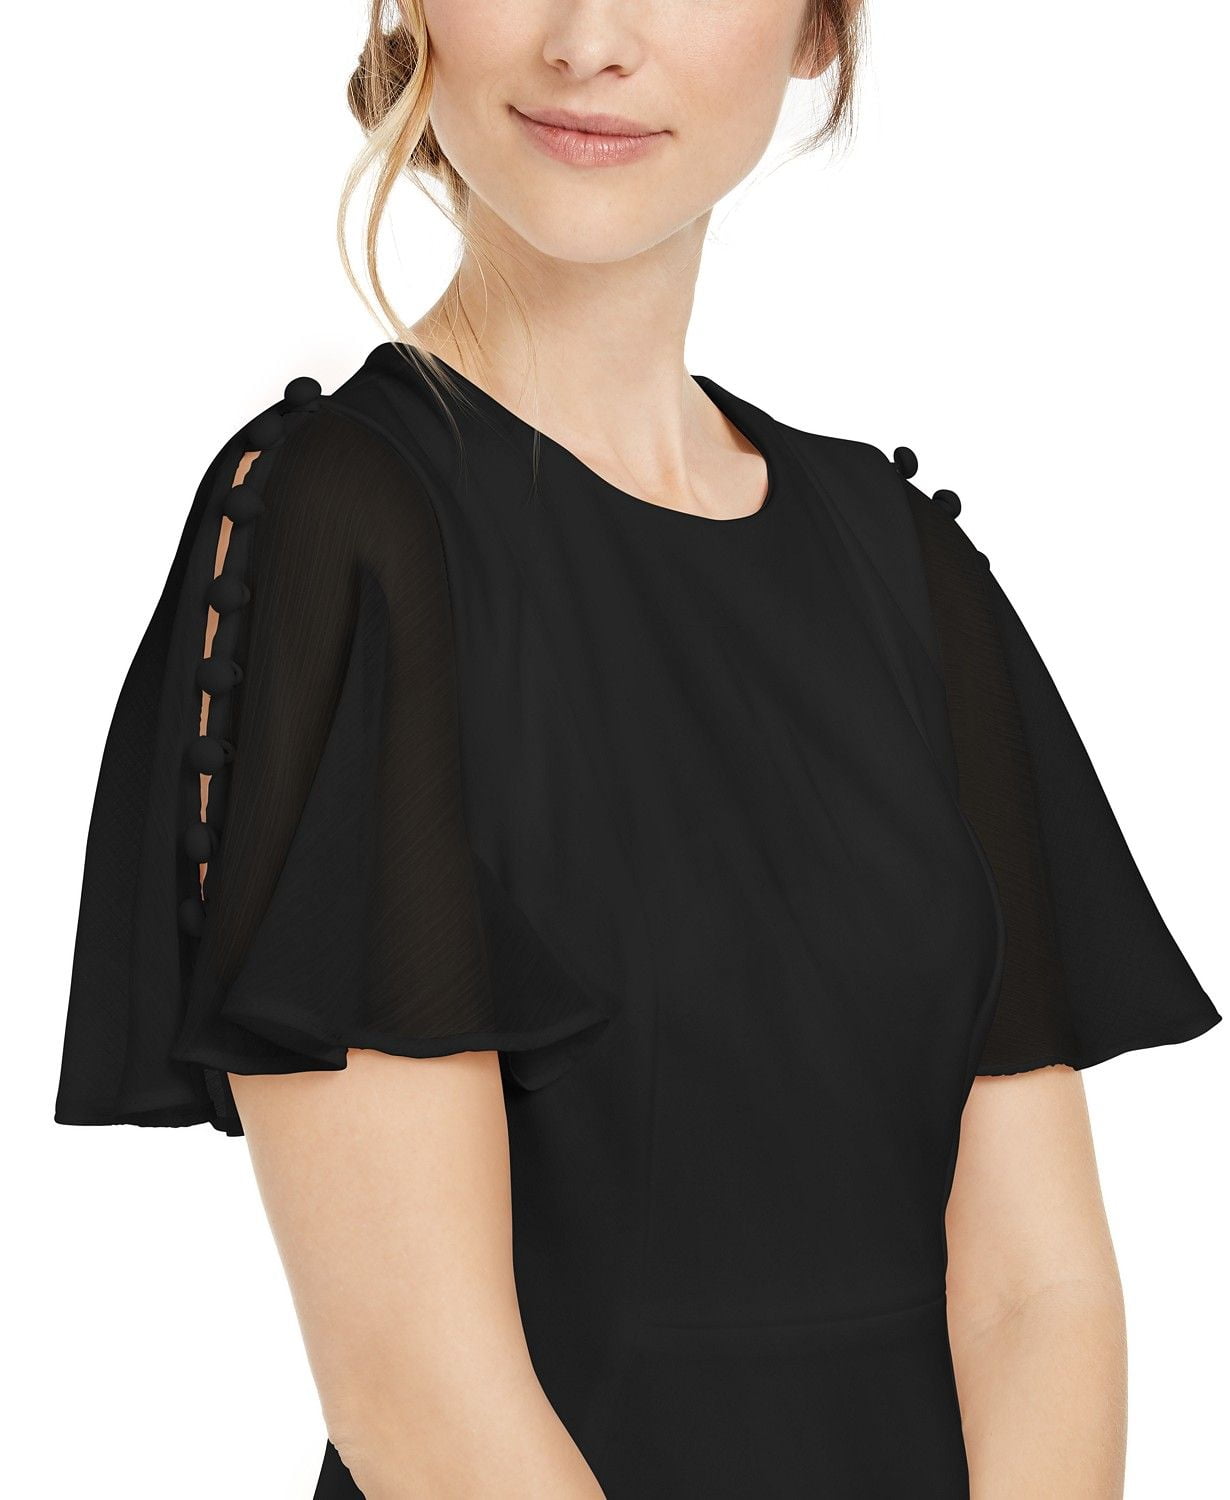 Đầm Nữ Calvin Klein Chiffon-Sleeve Sheath Dress Black